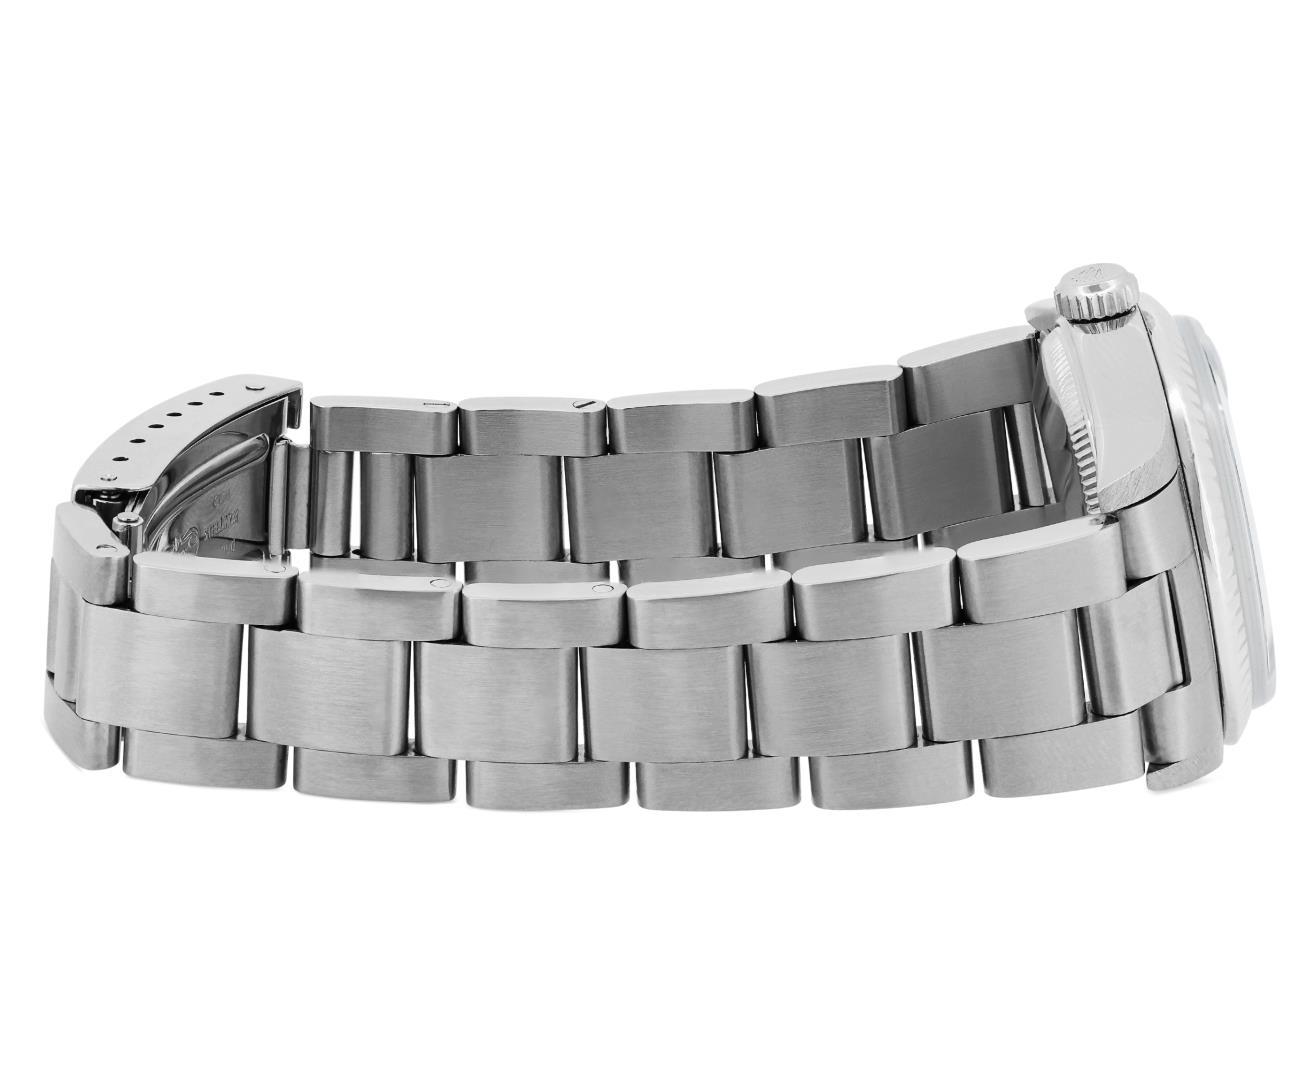 Rolex Midsize Stainless Steel Datejust Wristwatch With Rolex Box